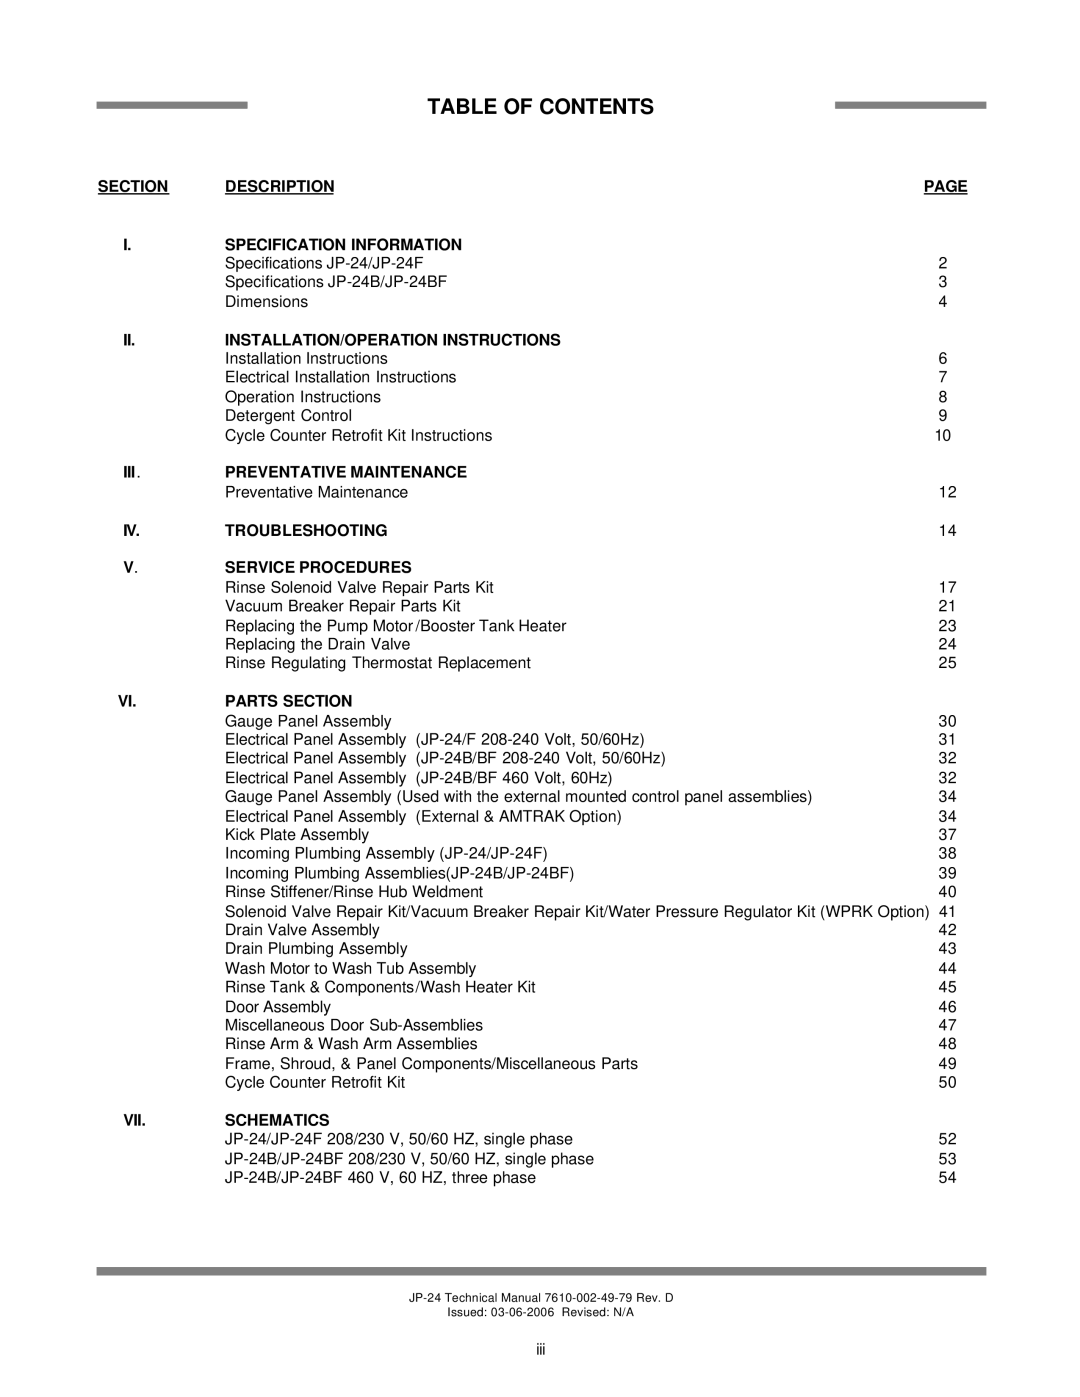 Jackson JP-24 Table Of Contents, Section, Description, Page, I. Specification Information, Preventative Maintenance 